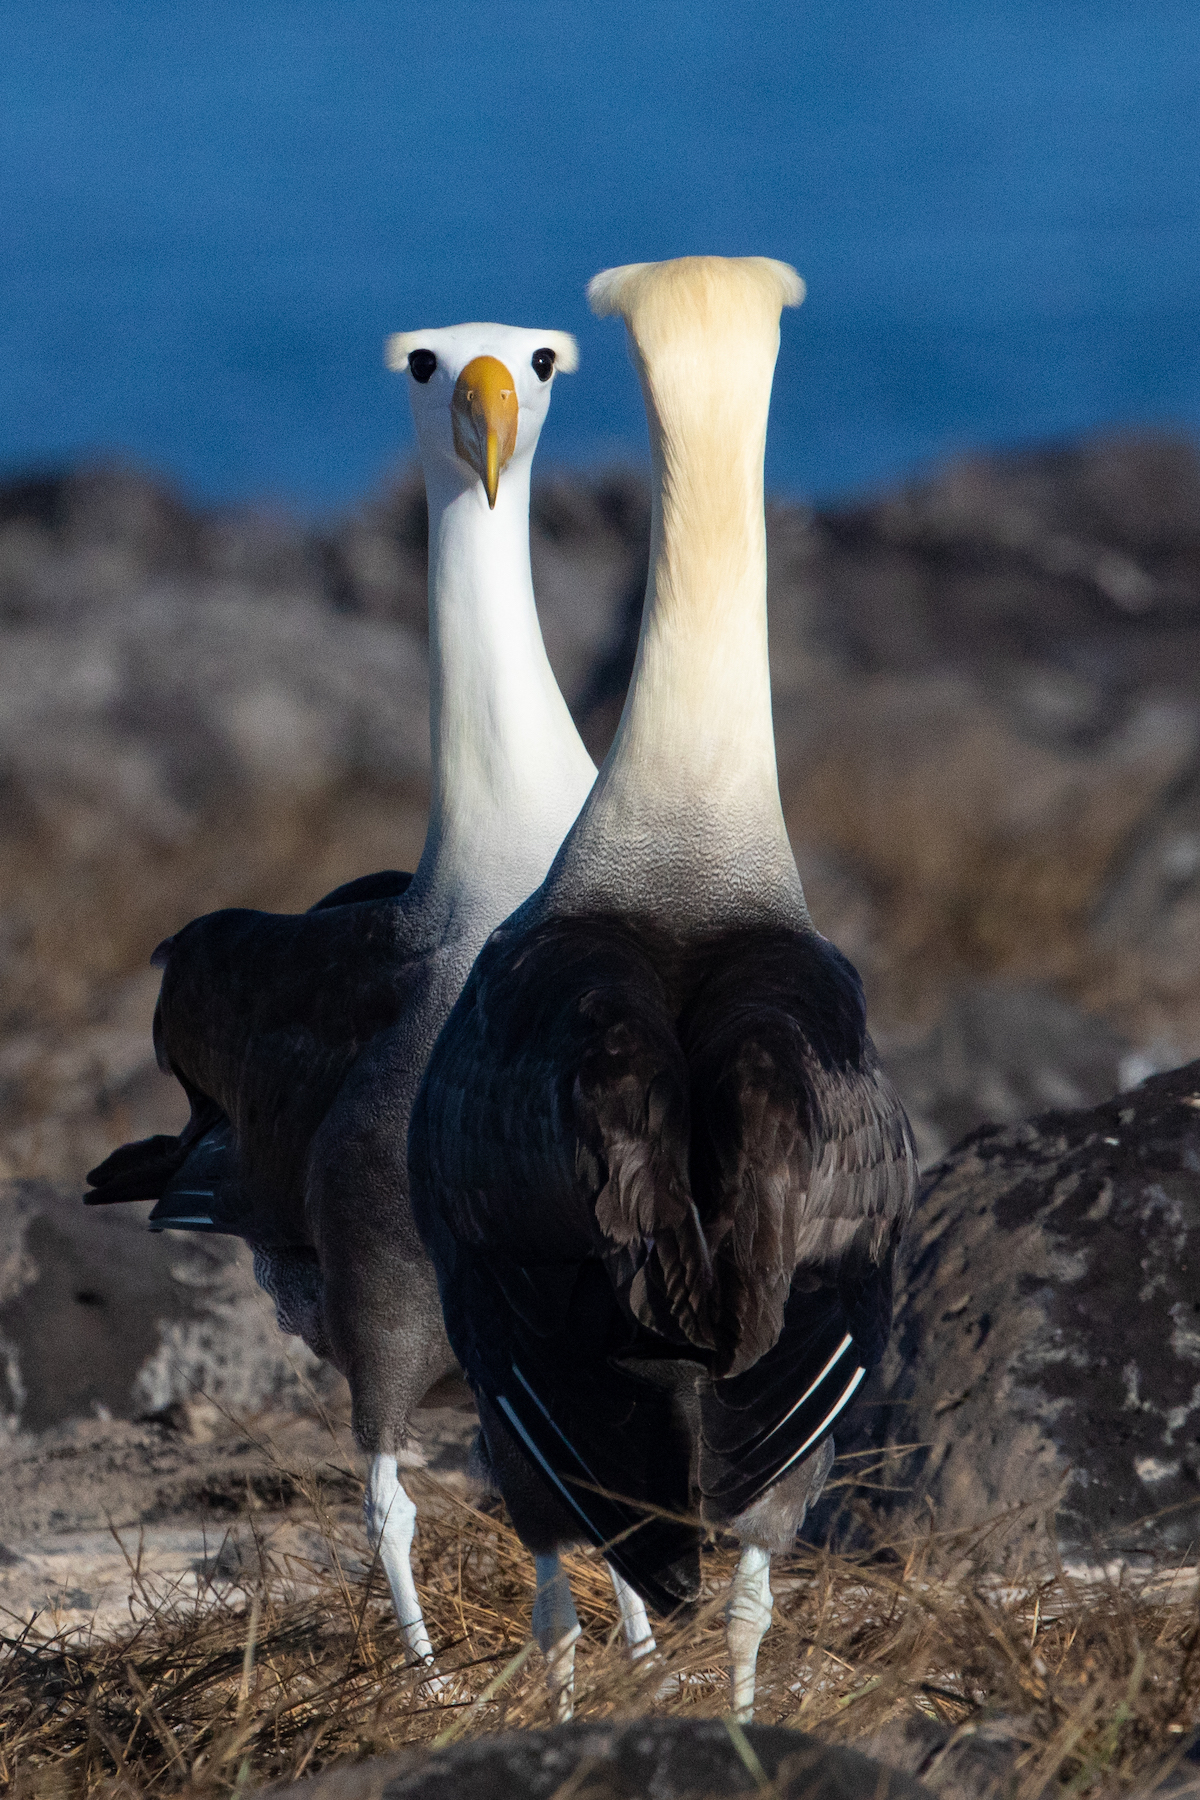 The dance of Waved Albatross during their courtship display (image by Inger Vandyke)